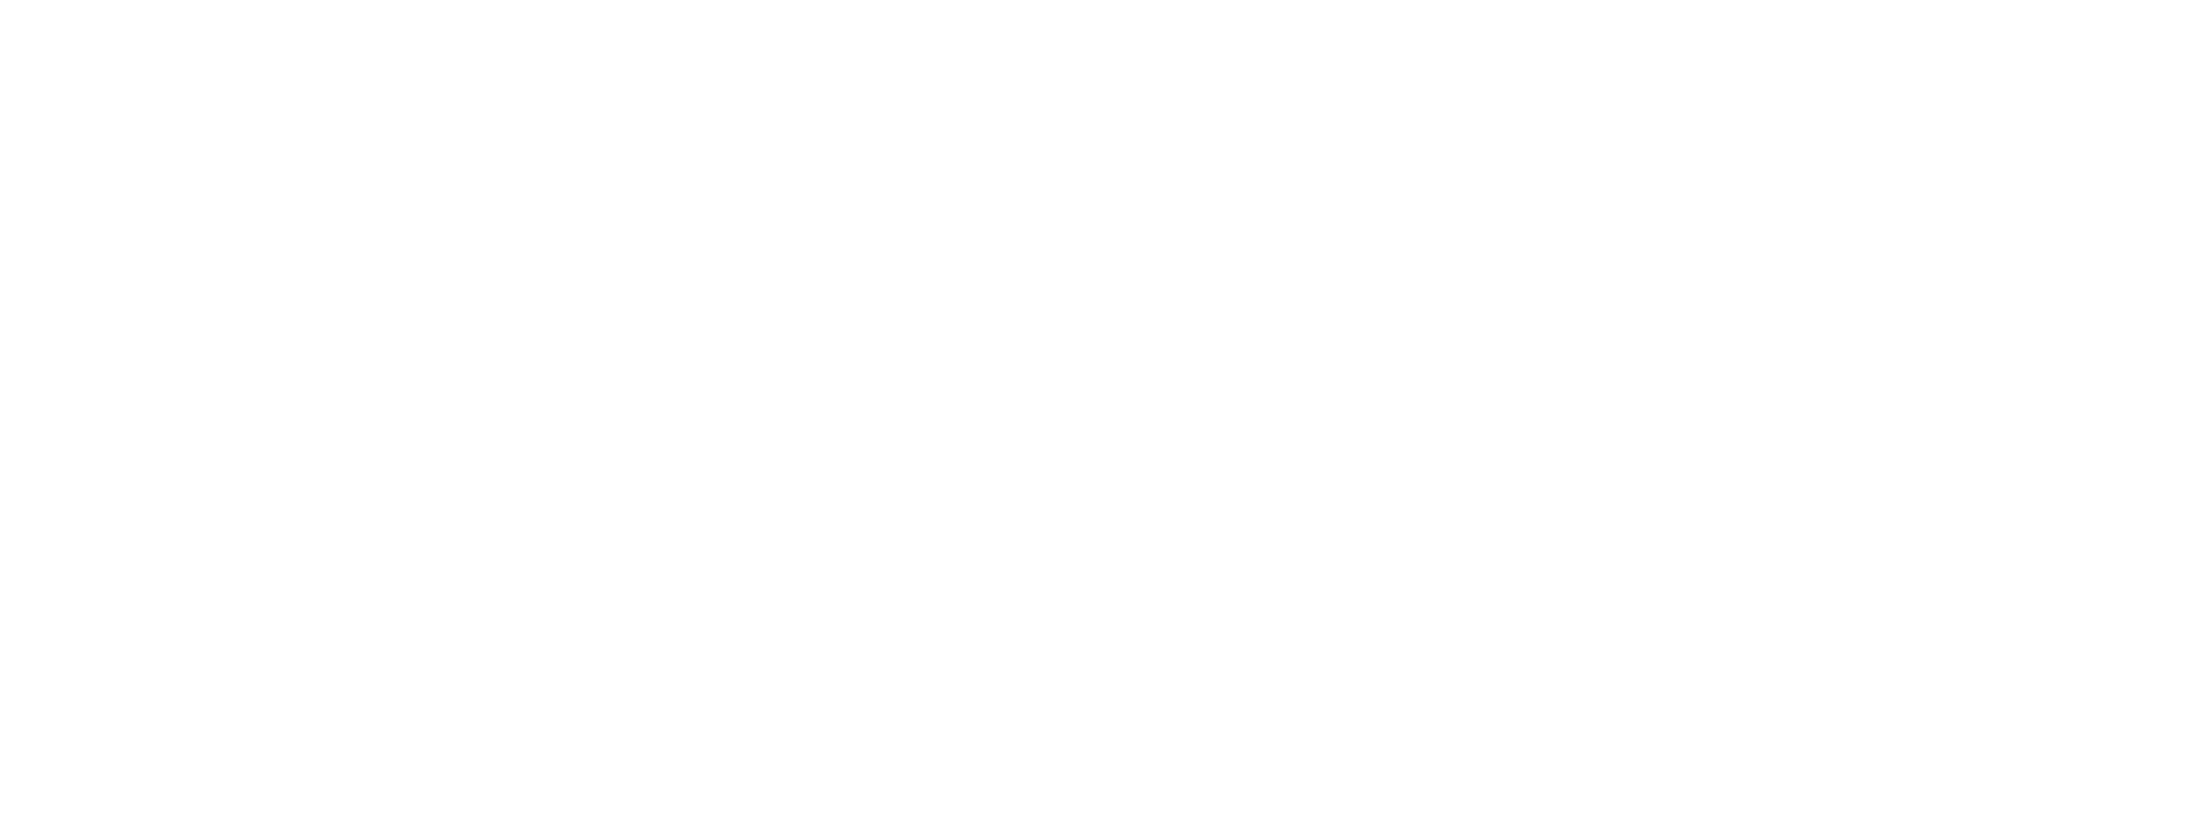 Gigi's Hopsitality Group Bars